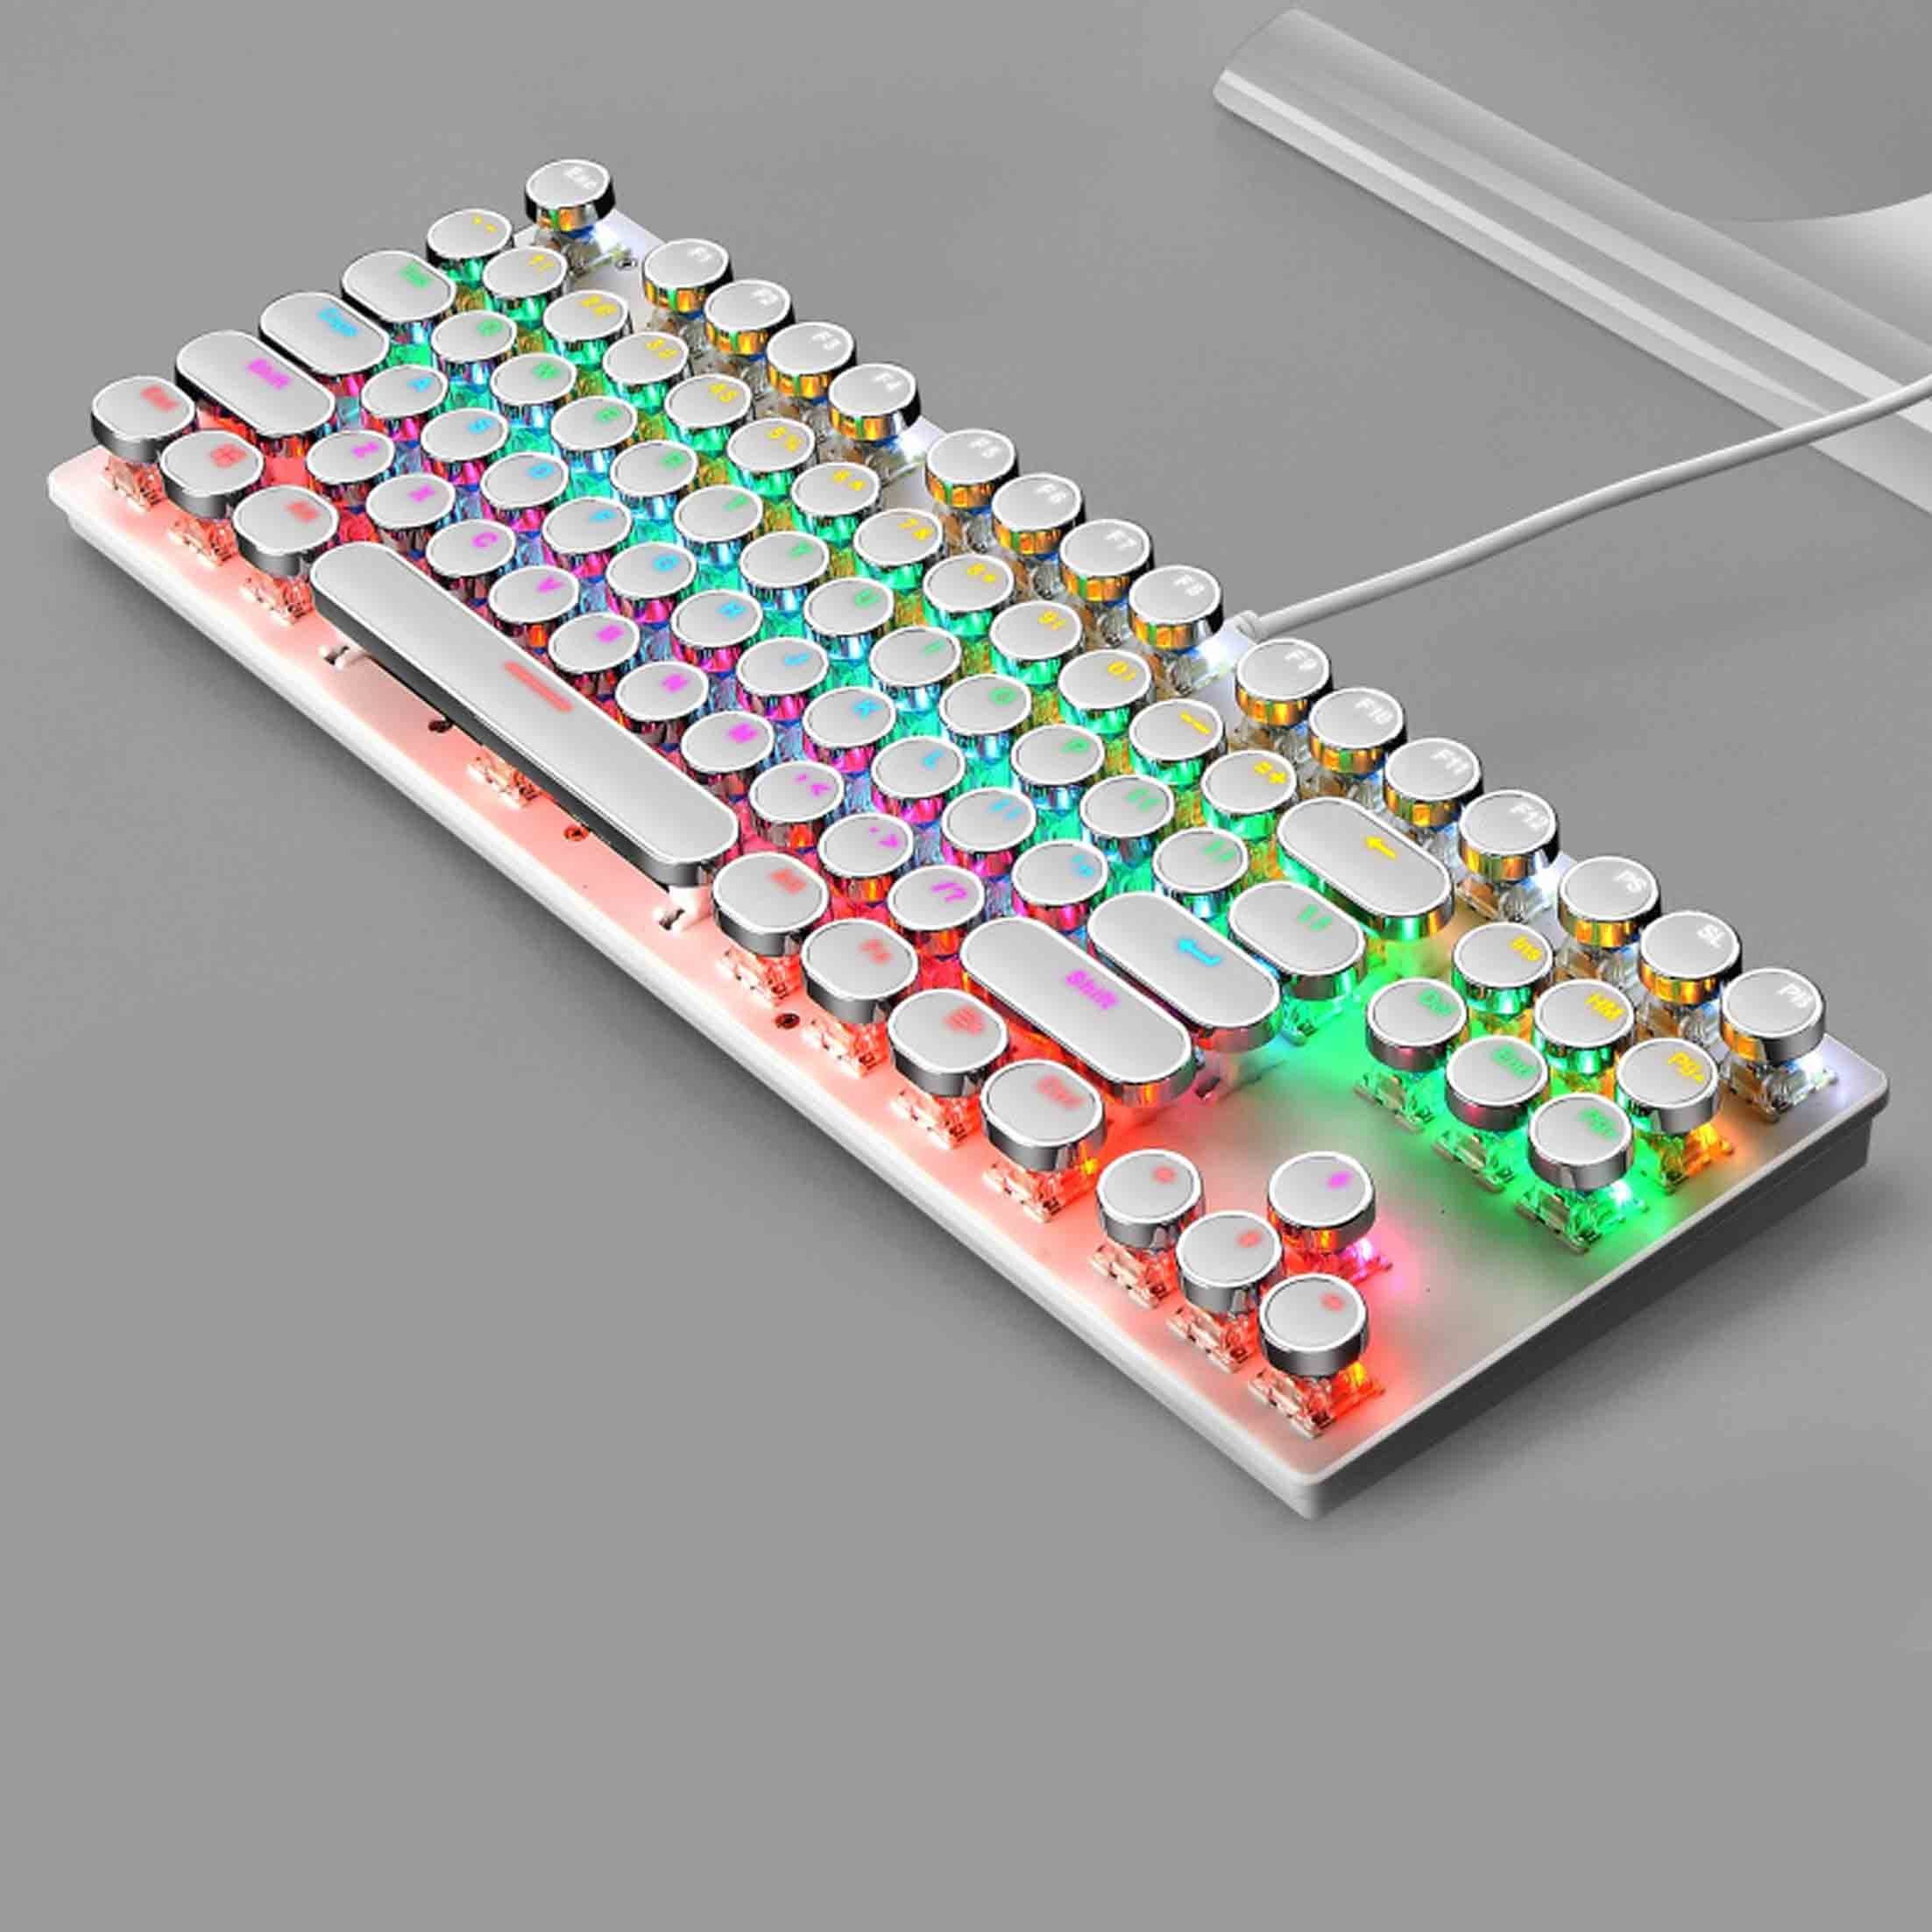 Diida Tastatur, mechanische Tastatur,Hot-swap-fähige Tastatur,Punk-Keyboard Tastatur